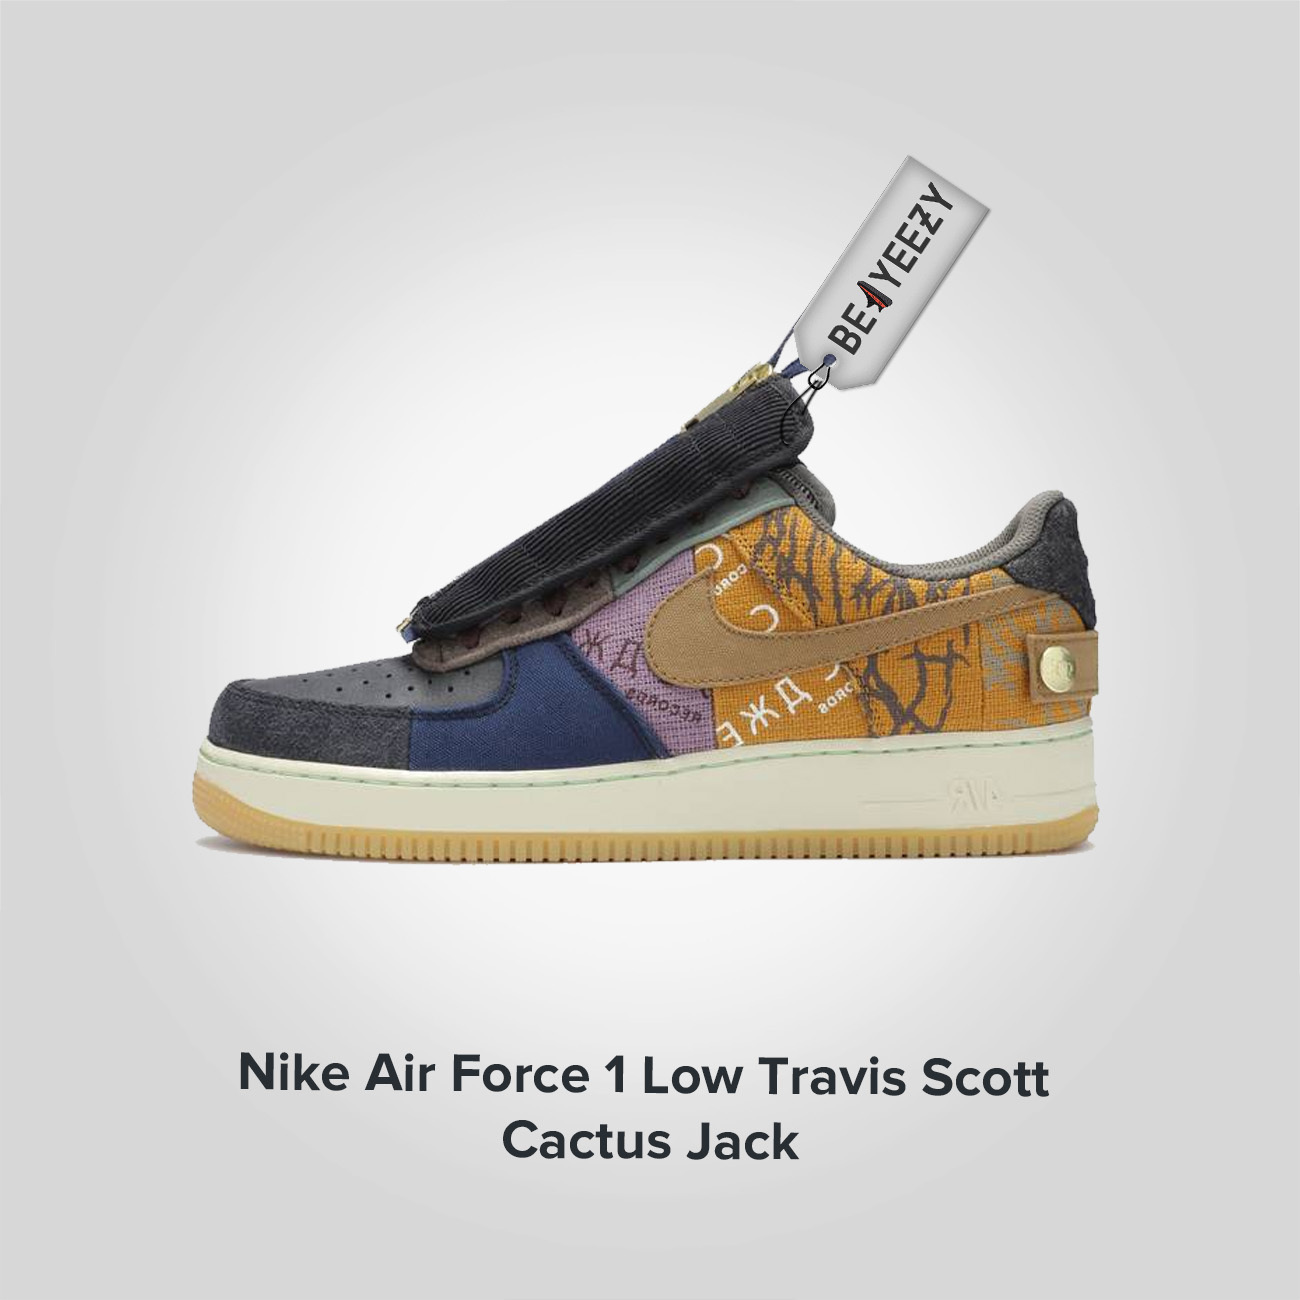 Nike Air Force 1 Low Travis Scott Cactus Jack